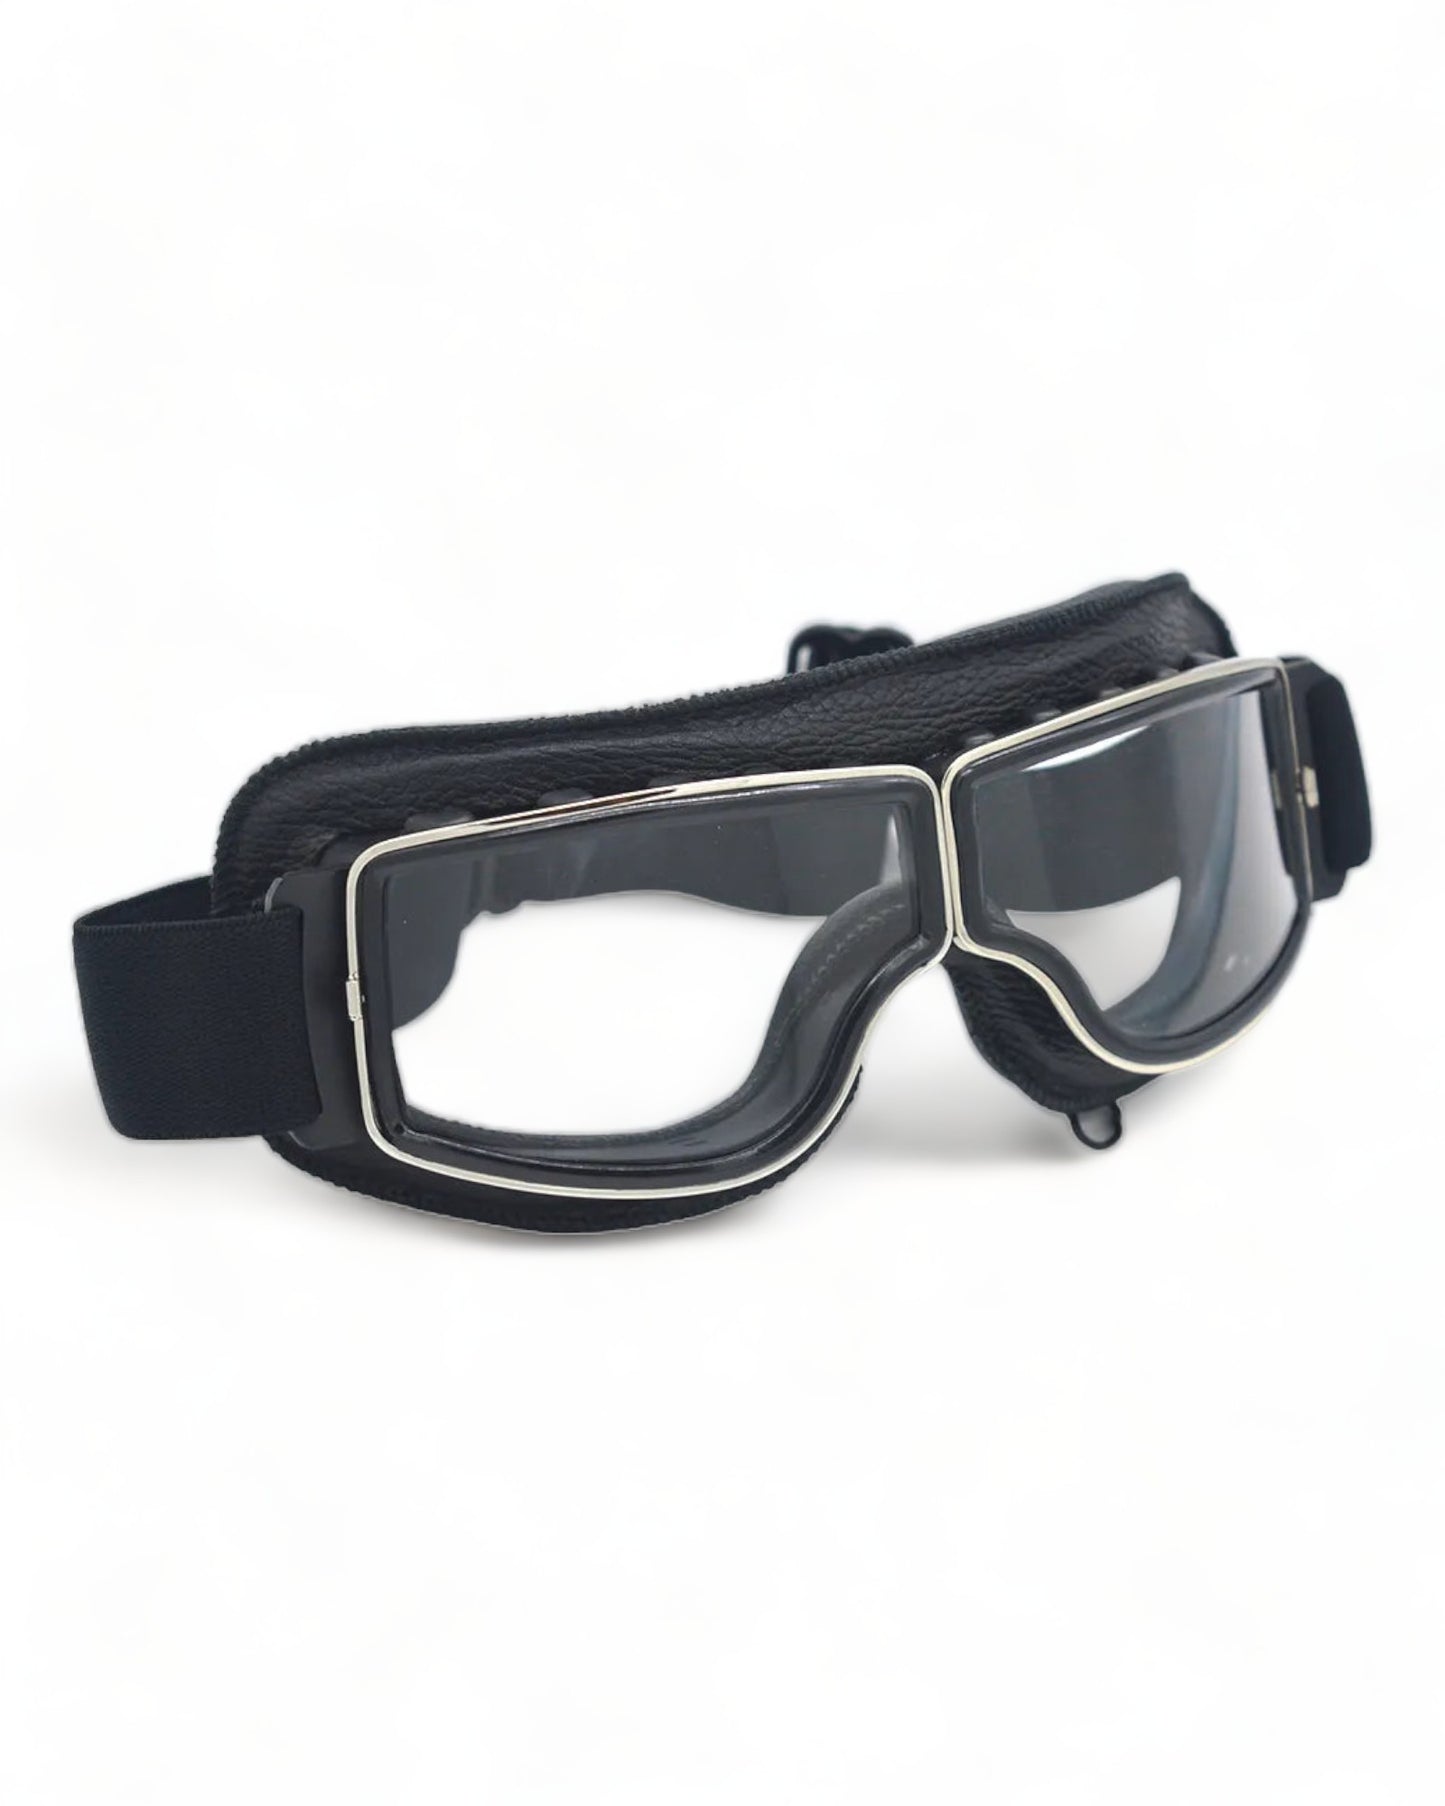 Clear Sunglasses Eyewear Goggles steampunk cyberpunk Vintage Desert Motorcycle